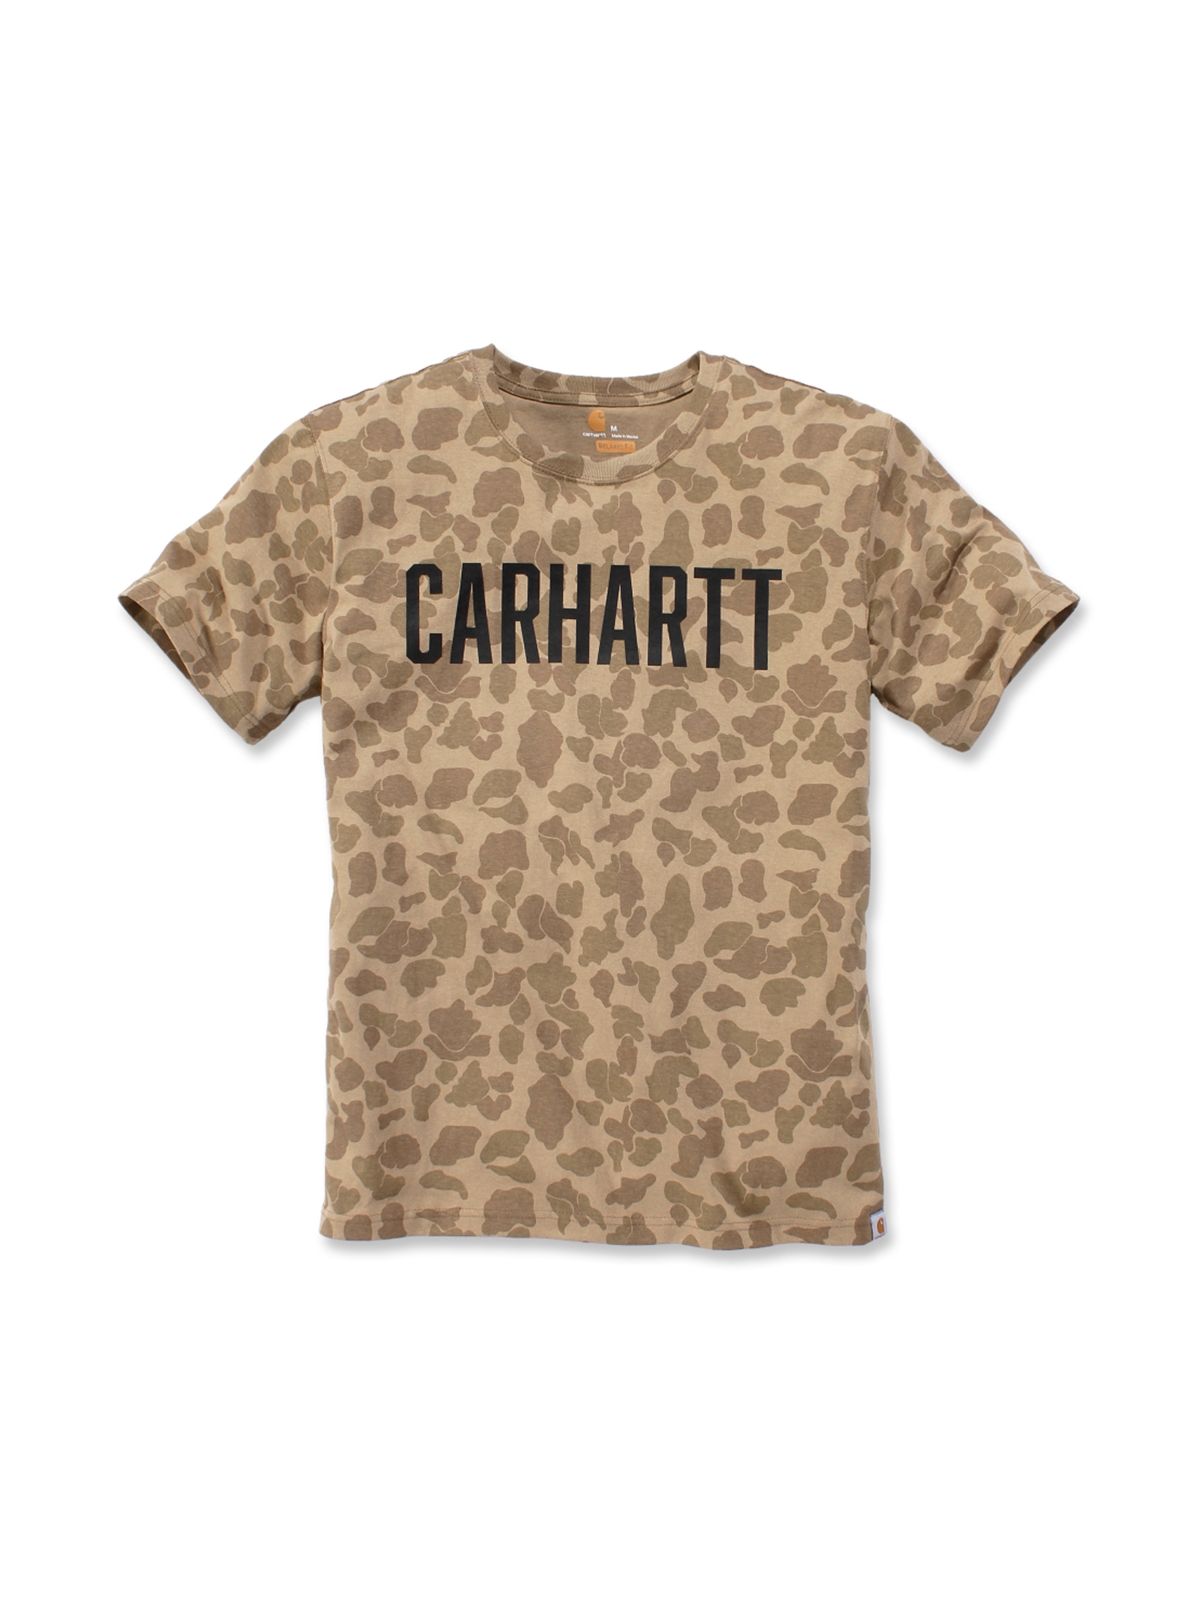 strategi Martin Luther King Junior Alfabet Carhartt 104346 Camo Block Logo T-Shirt - Dark Khaki Camo